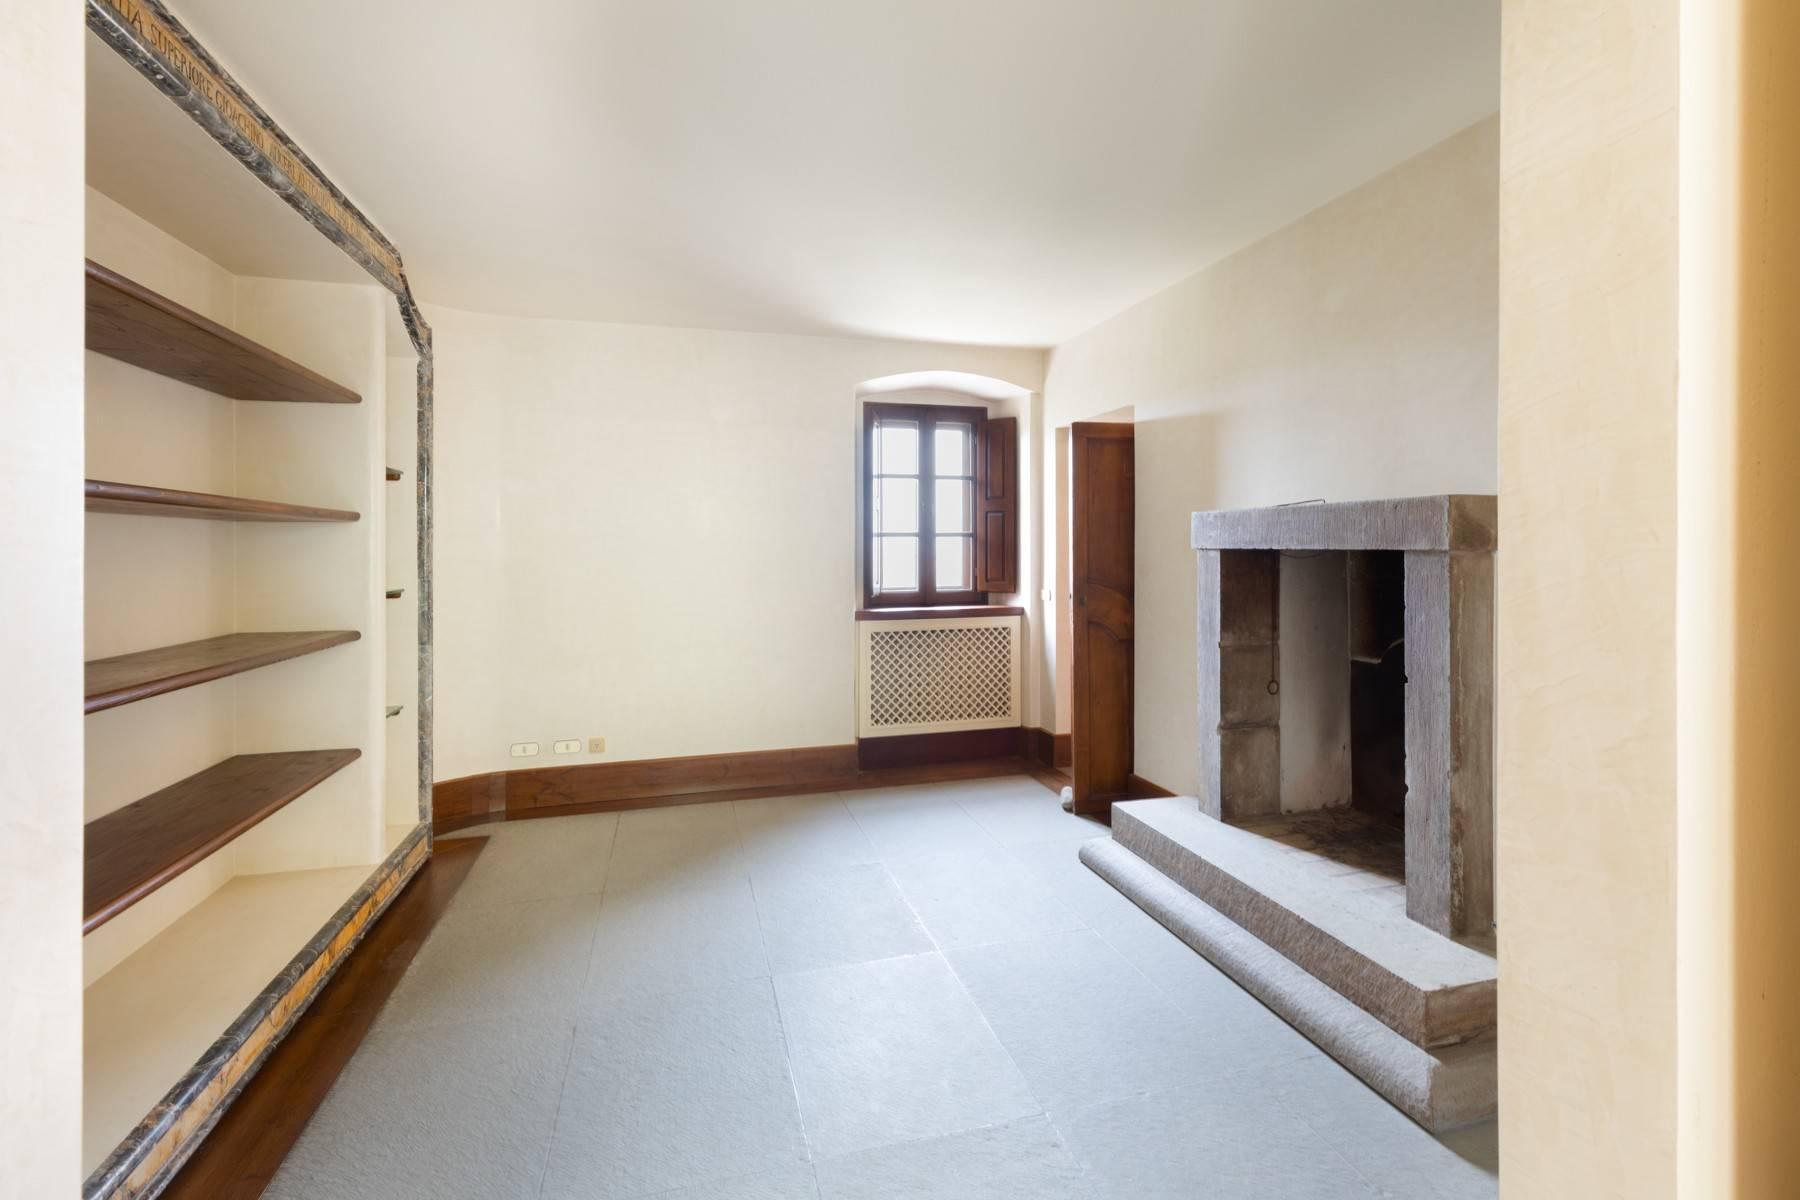 Historical villa dating back to the XVII century overlooking Arezzo - 20